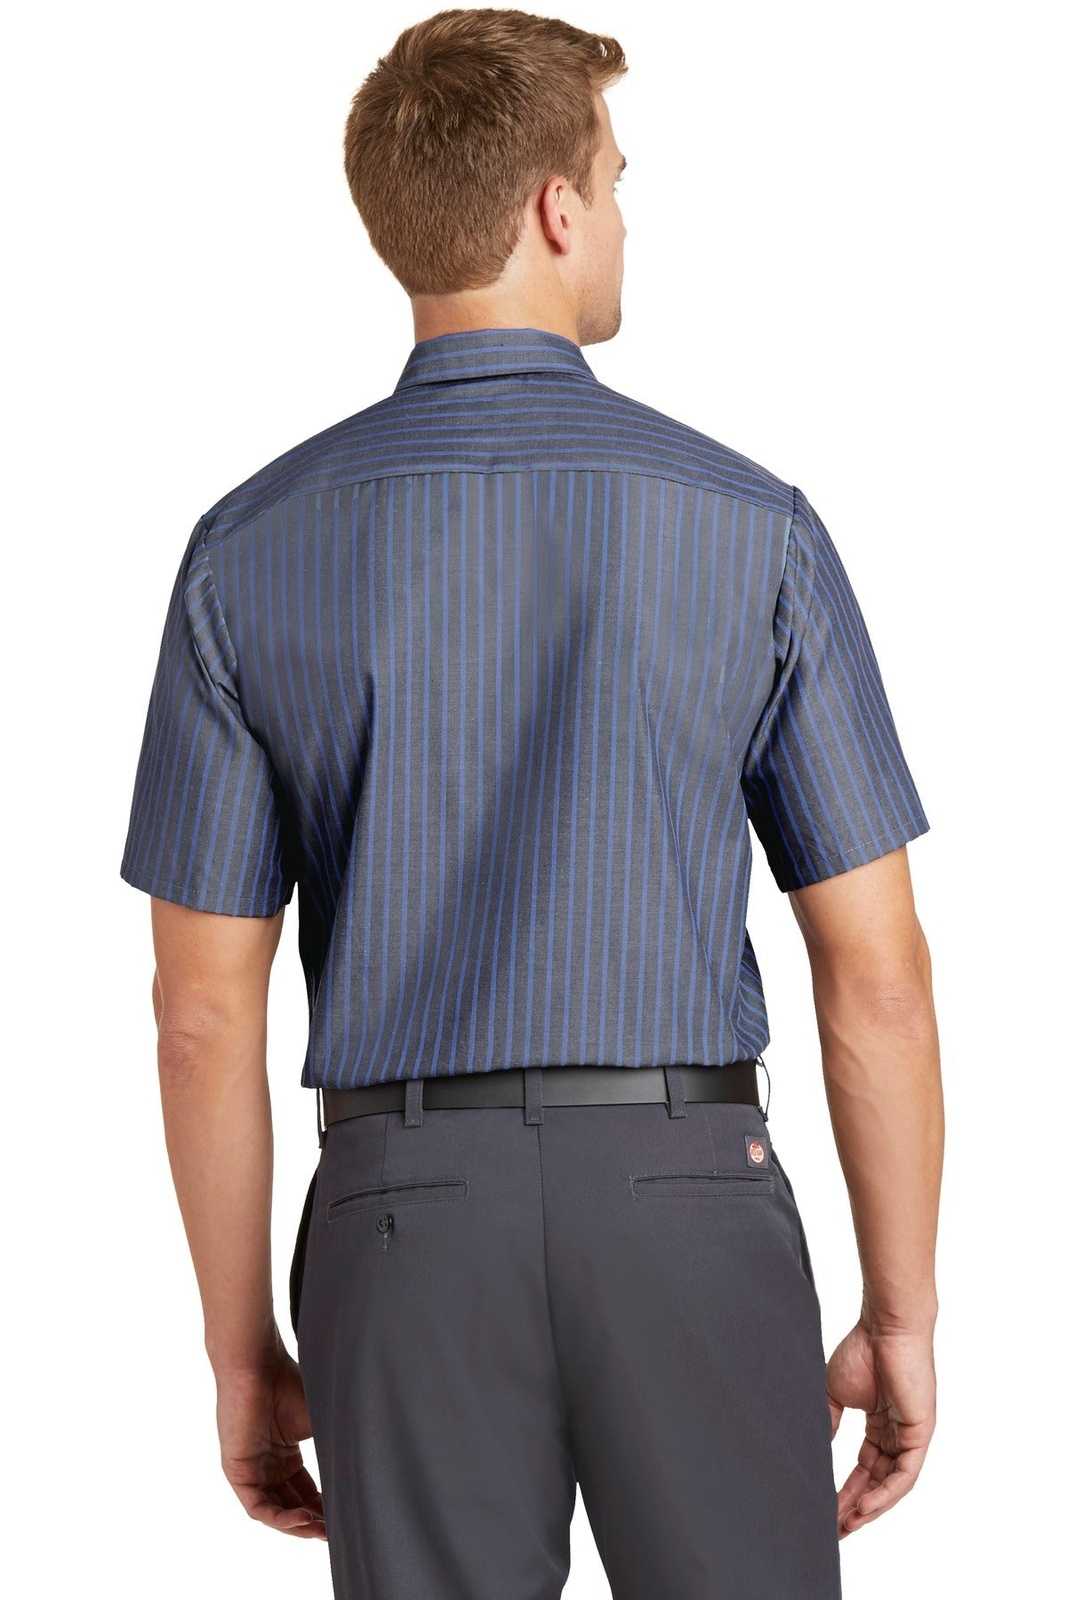 Red Kap CS20 Short Sleeve Striped Industrial Work Shirt - Gray/ Blue - HIT a Double - 2